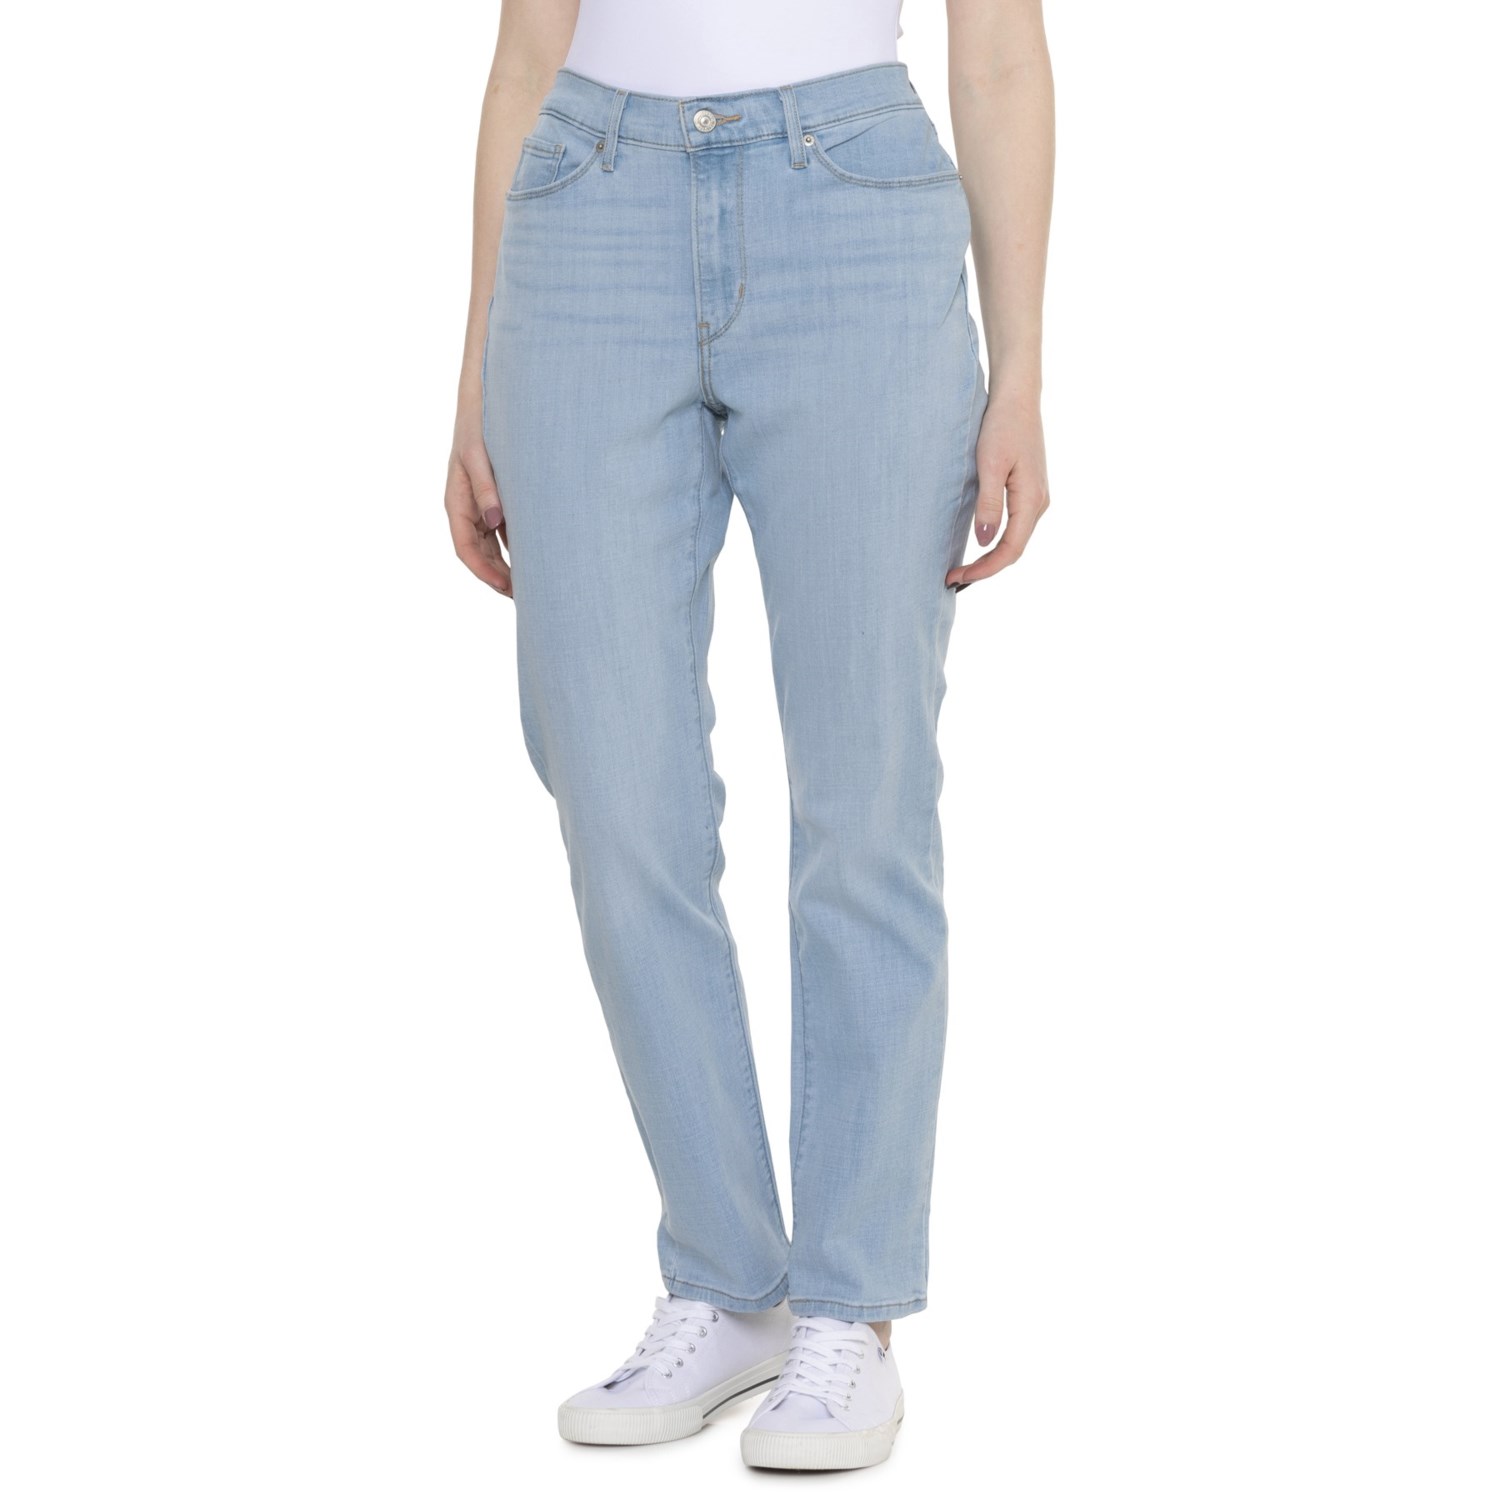 () [oCX NVbN Xg[g W[Y Levi's Classic Straight Jeans Slate Await